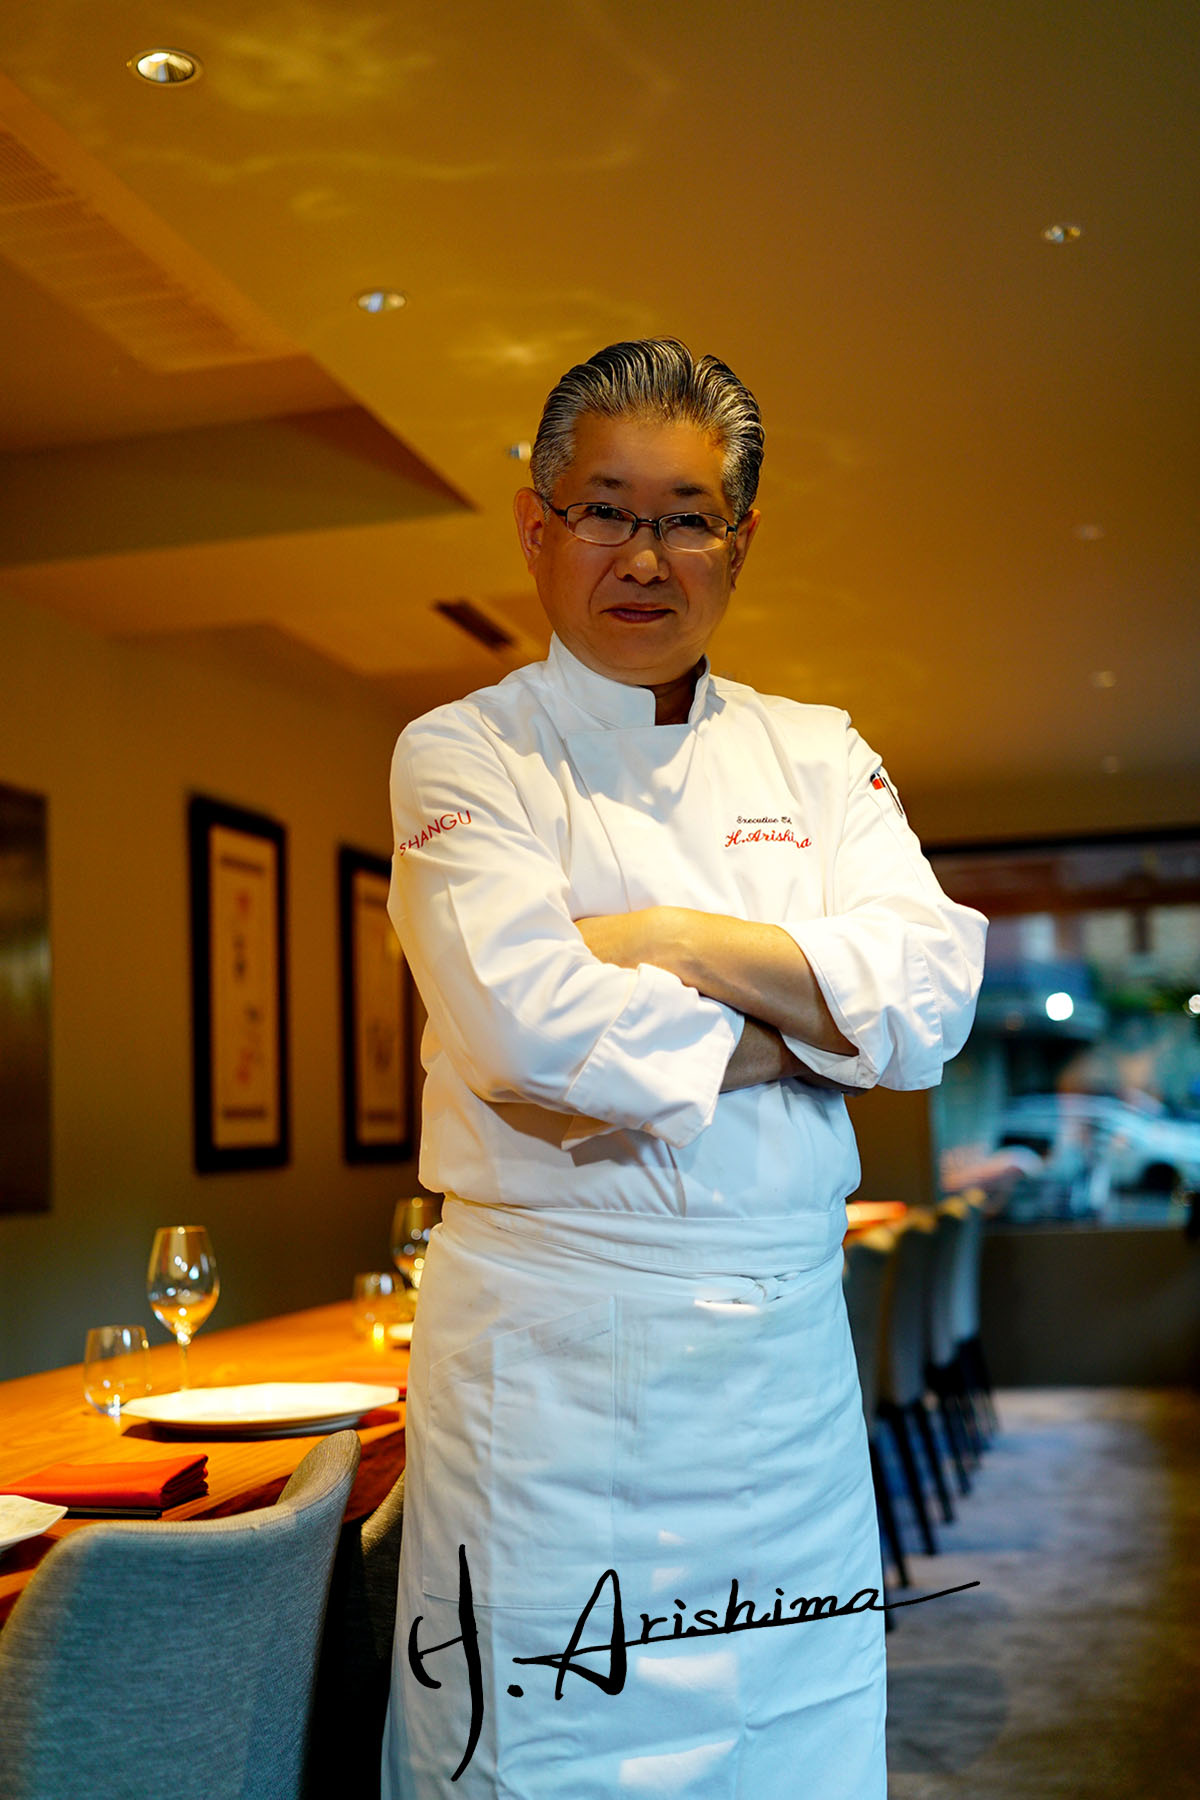 Chef Arishima